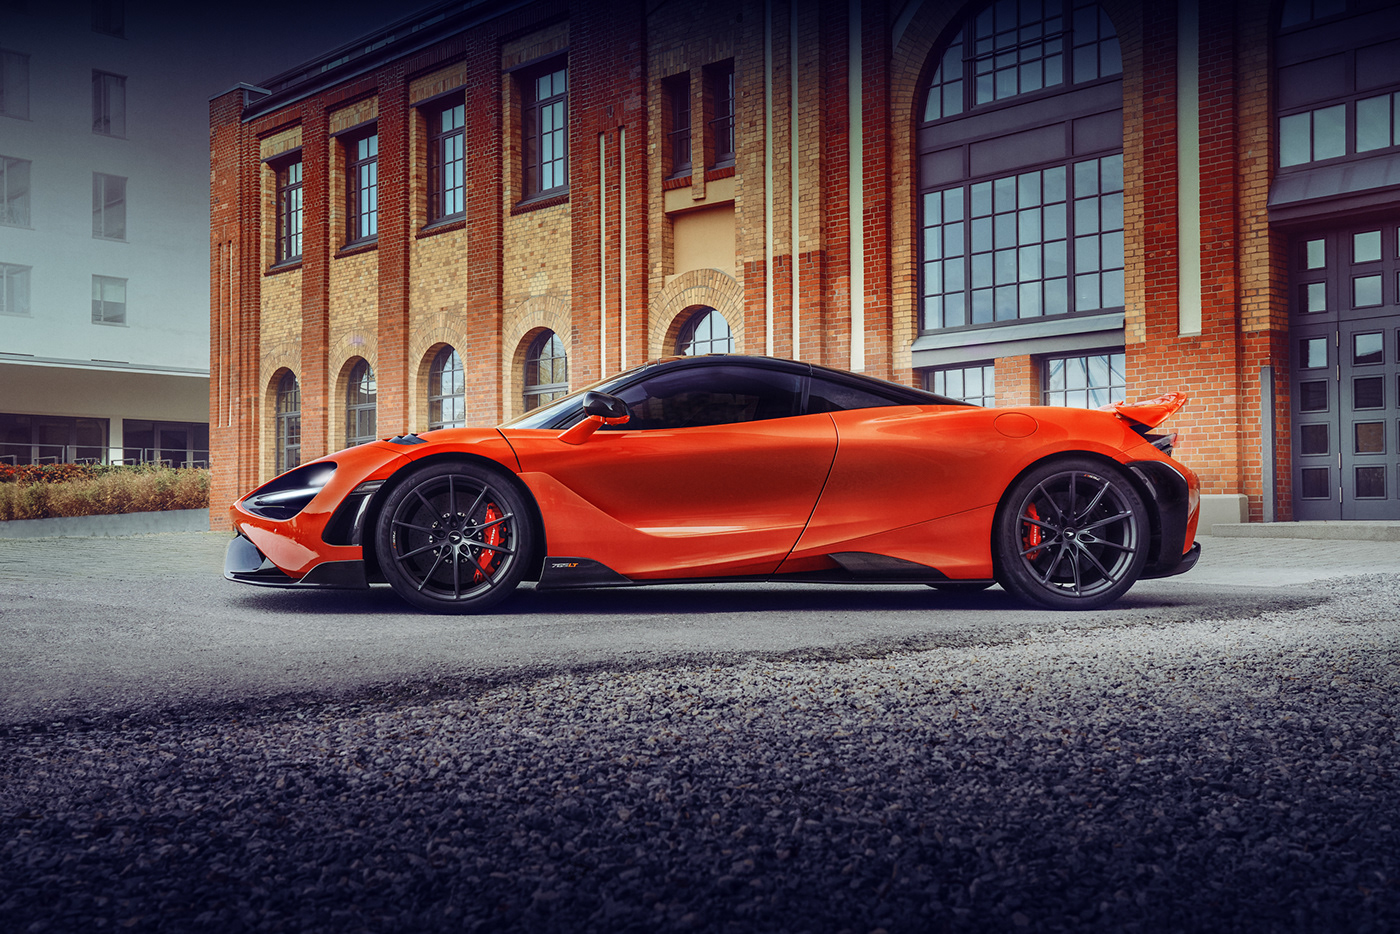 capture one car Düsseldorf McLaren photoshop